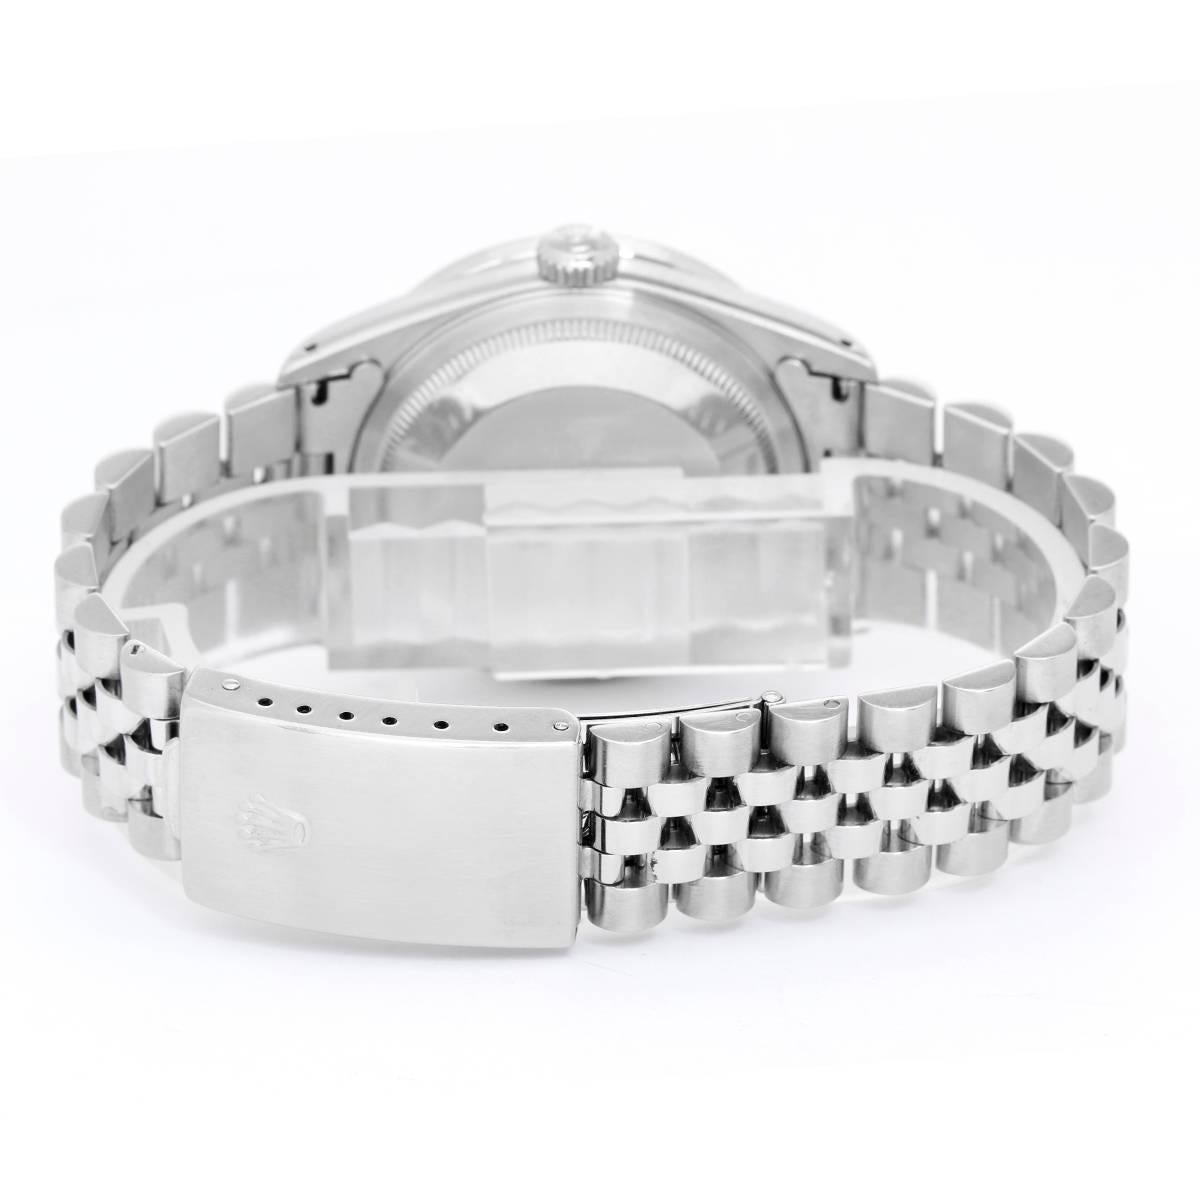 Round Cut Rolex Stainless Steel Datejust Automatic Wristwatch Ref 16220